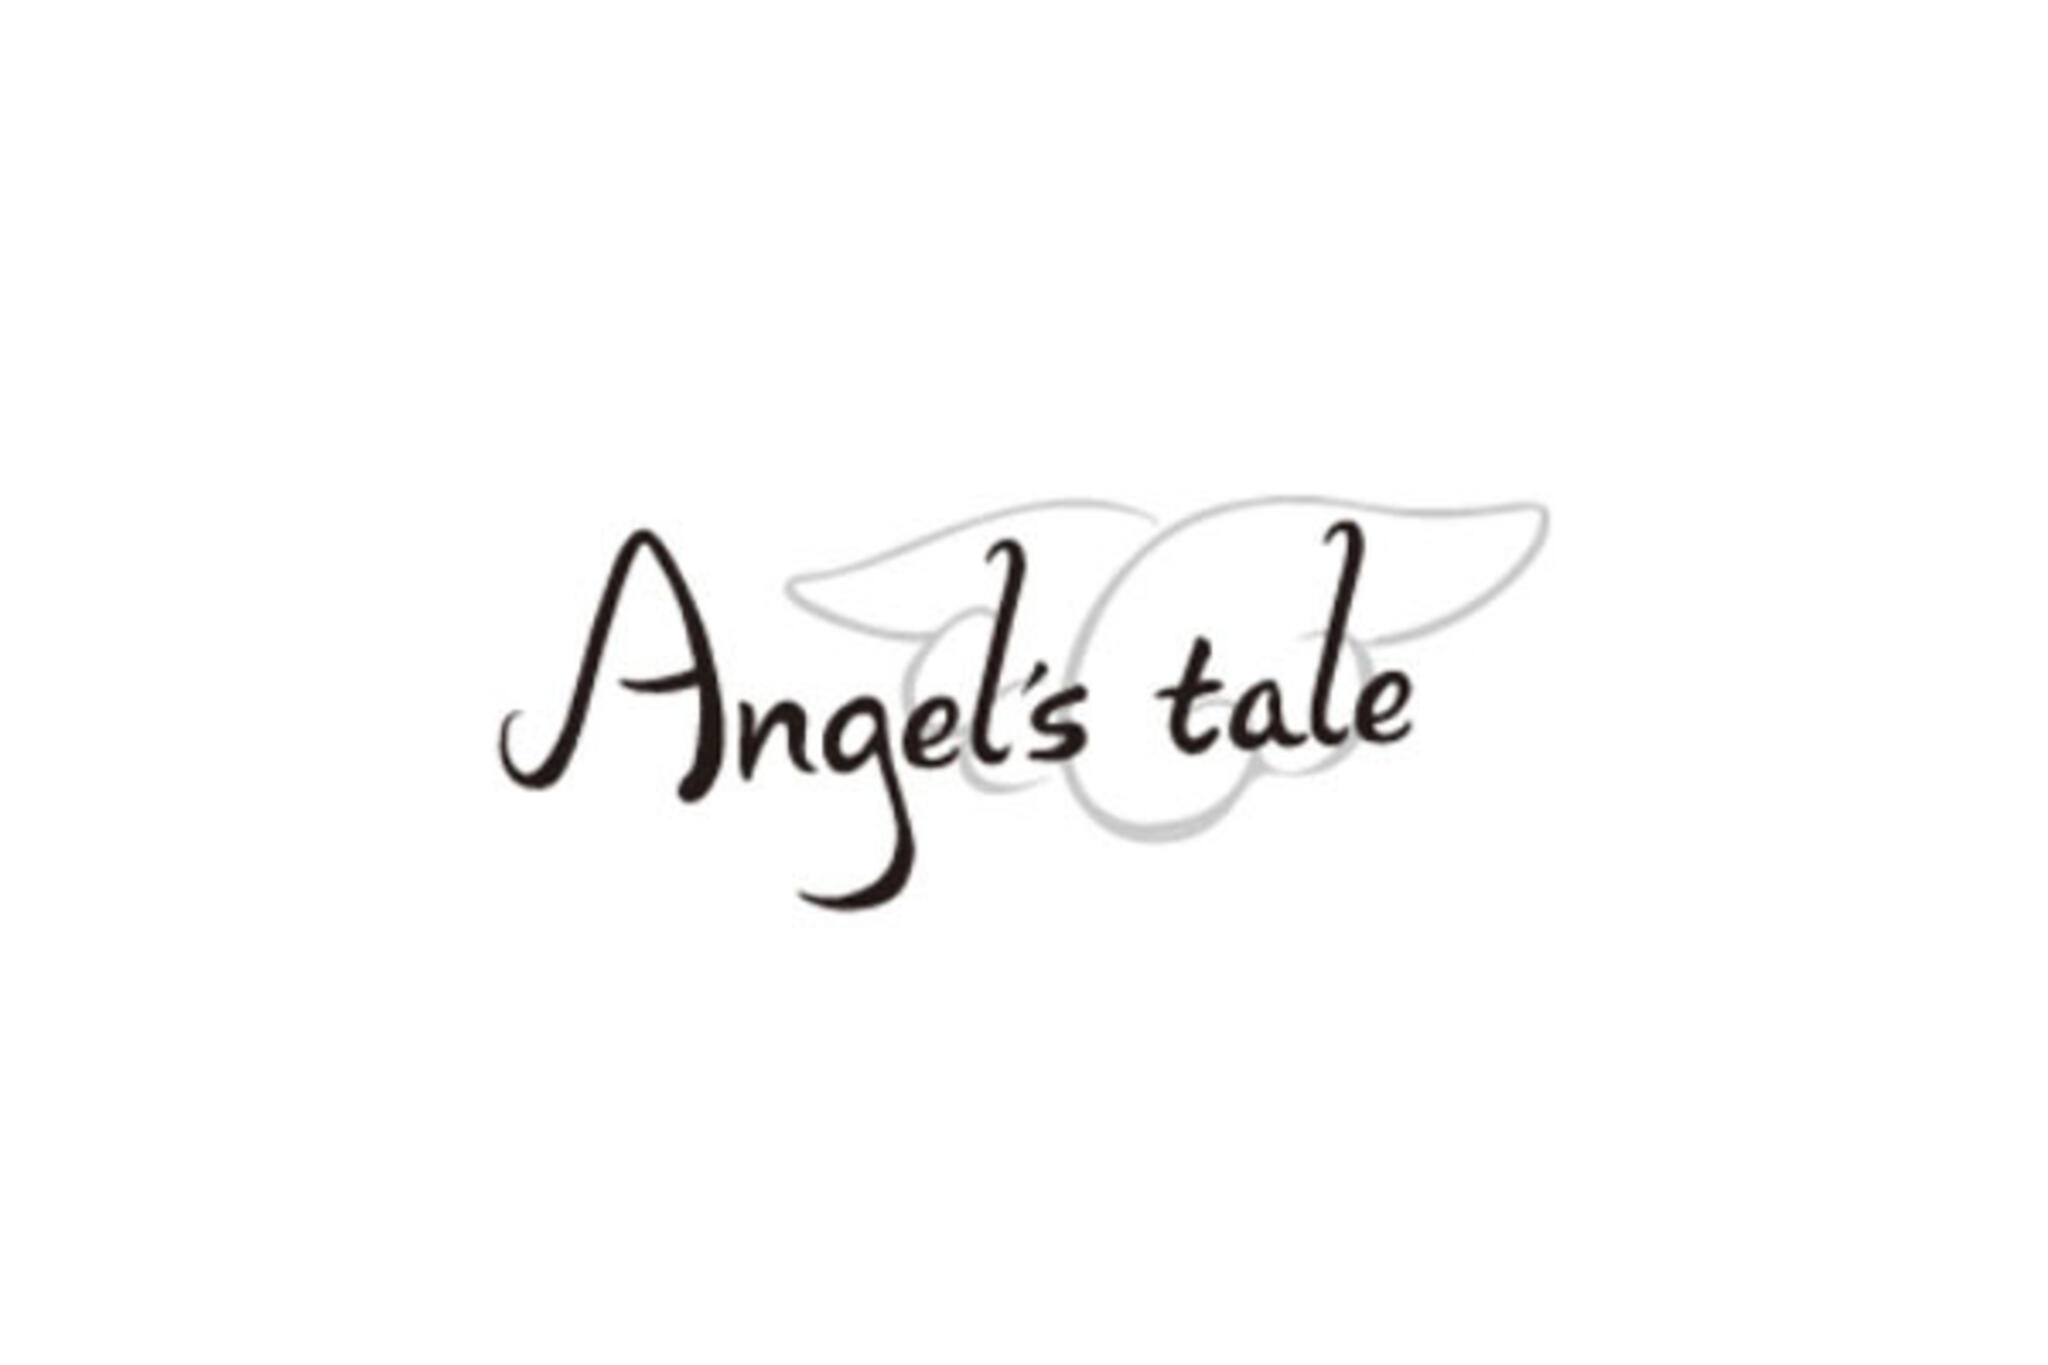 Angel's taleの代表写真1